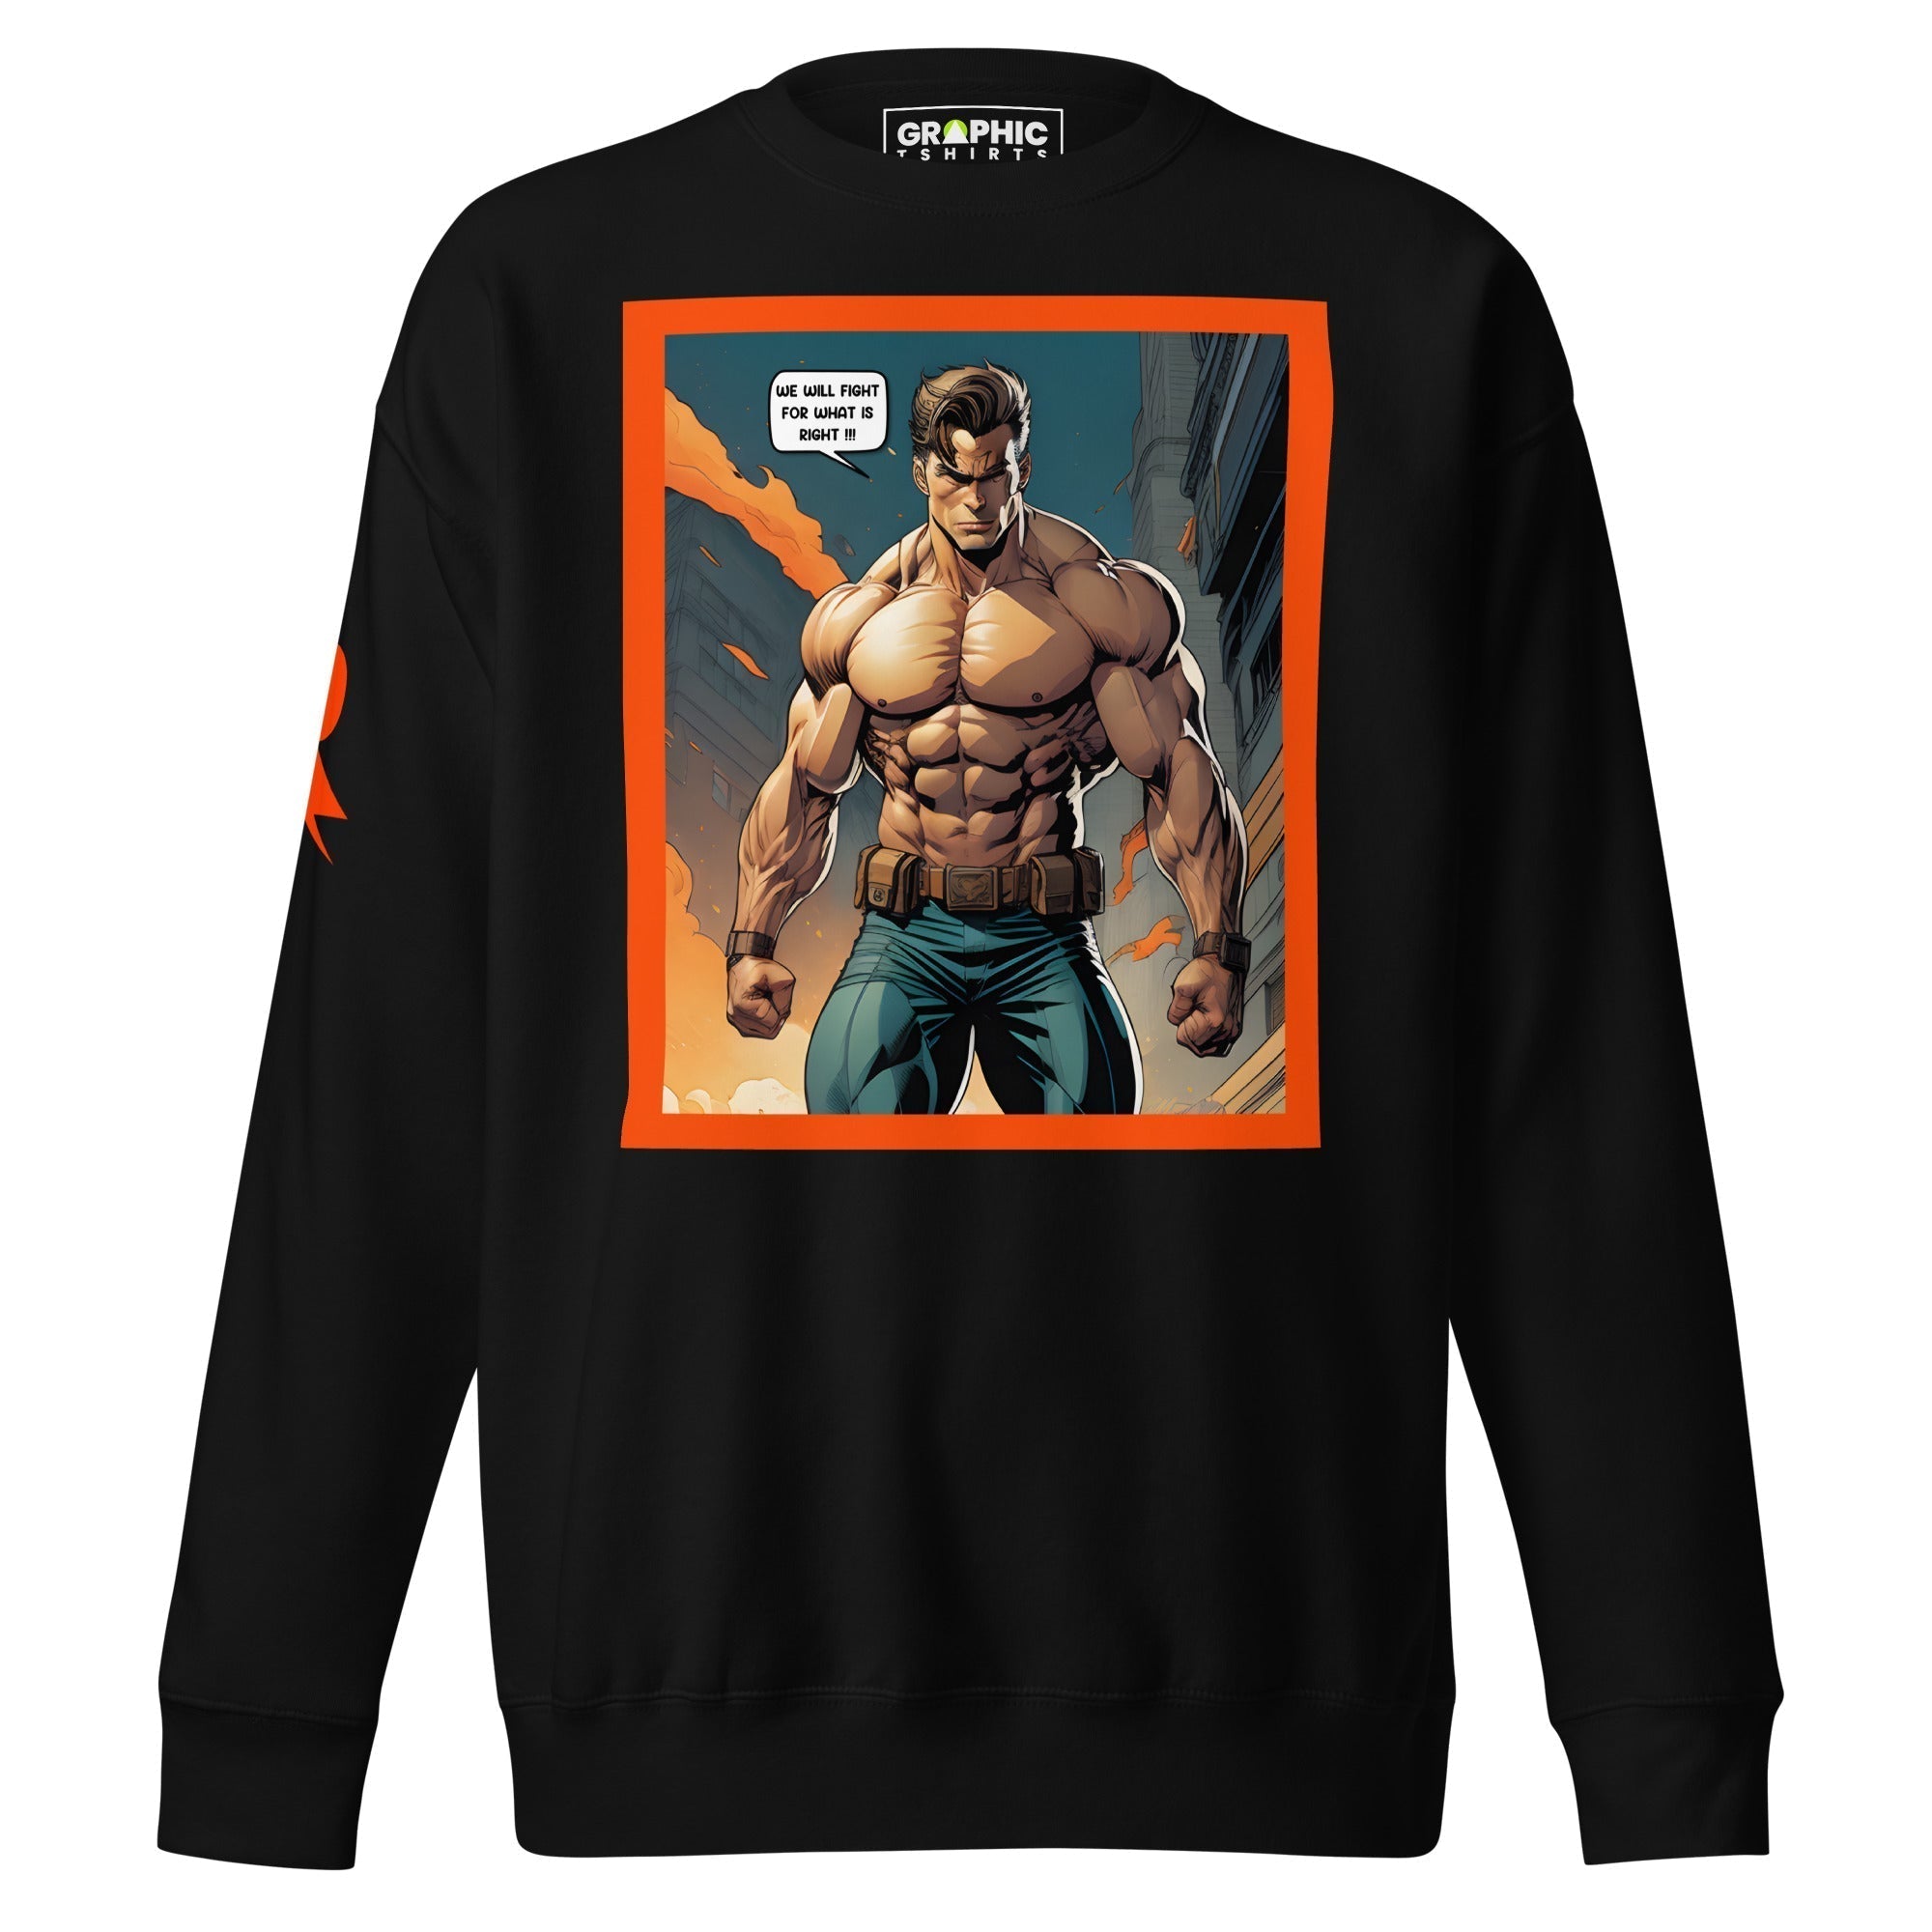 Unisex Premium Sweatshirt - Retribution: Heroes Unleashed v.35 - GRAPHIC T-SHIRTS